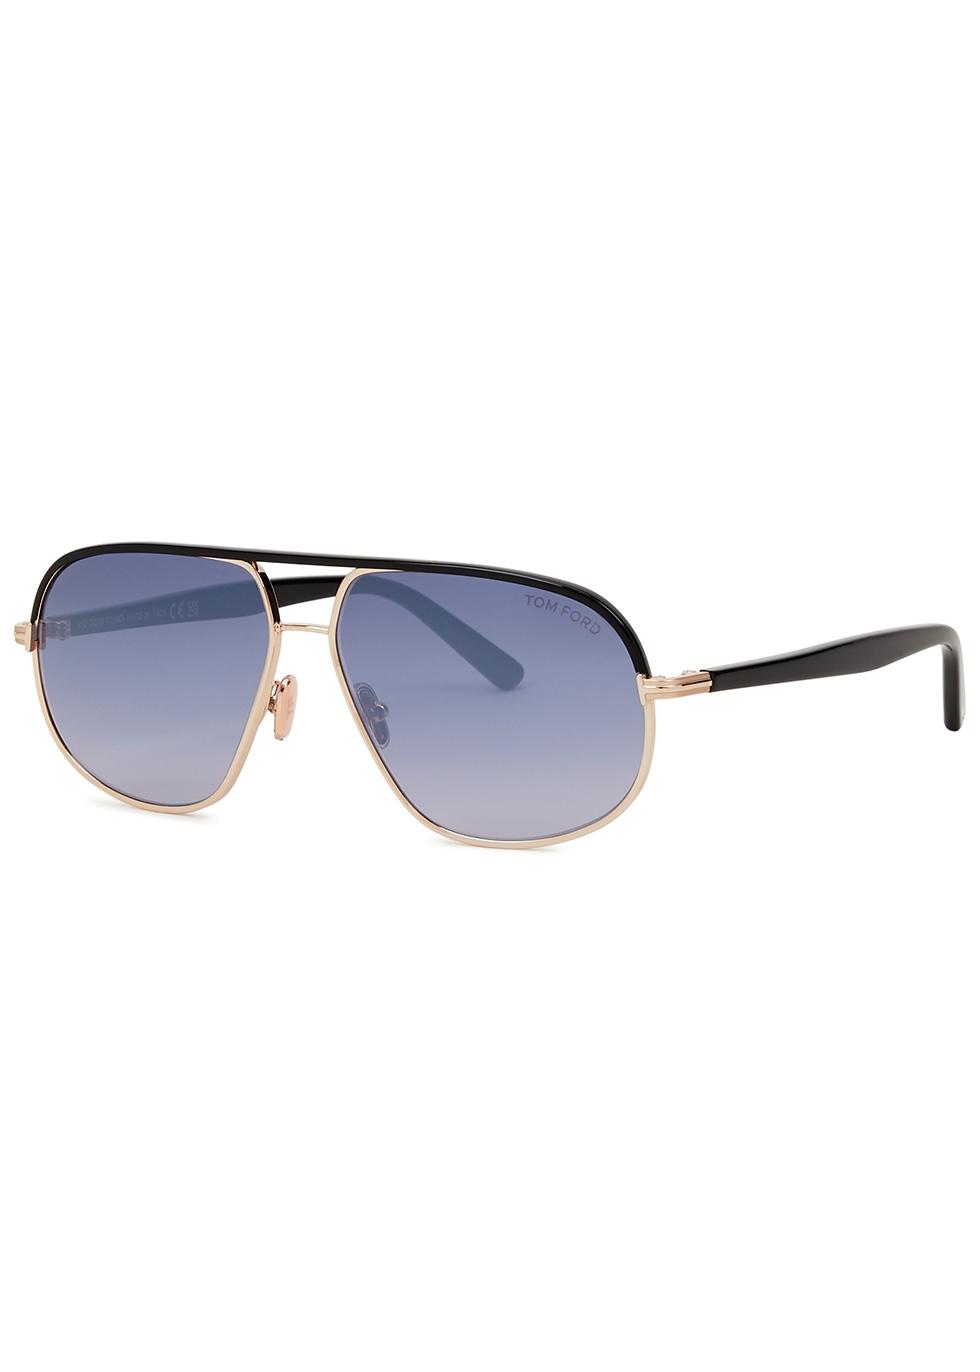 Amazon.com: Tom Ford Sunglasses